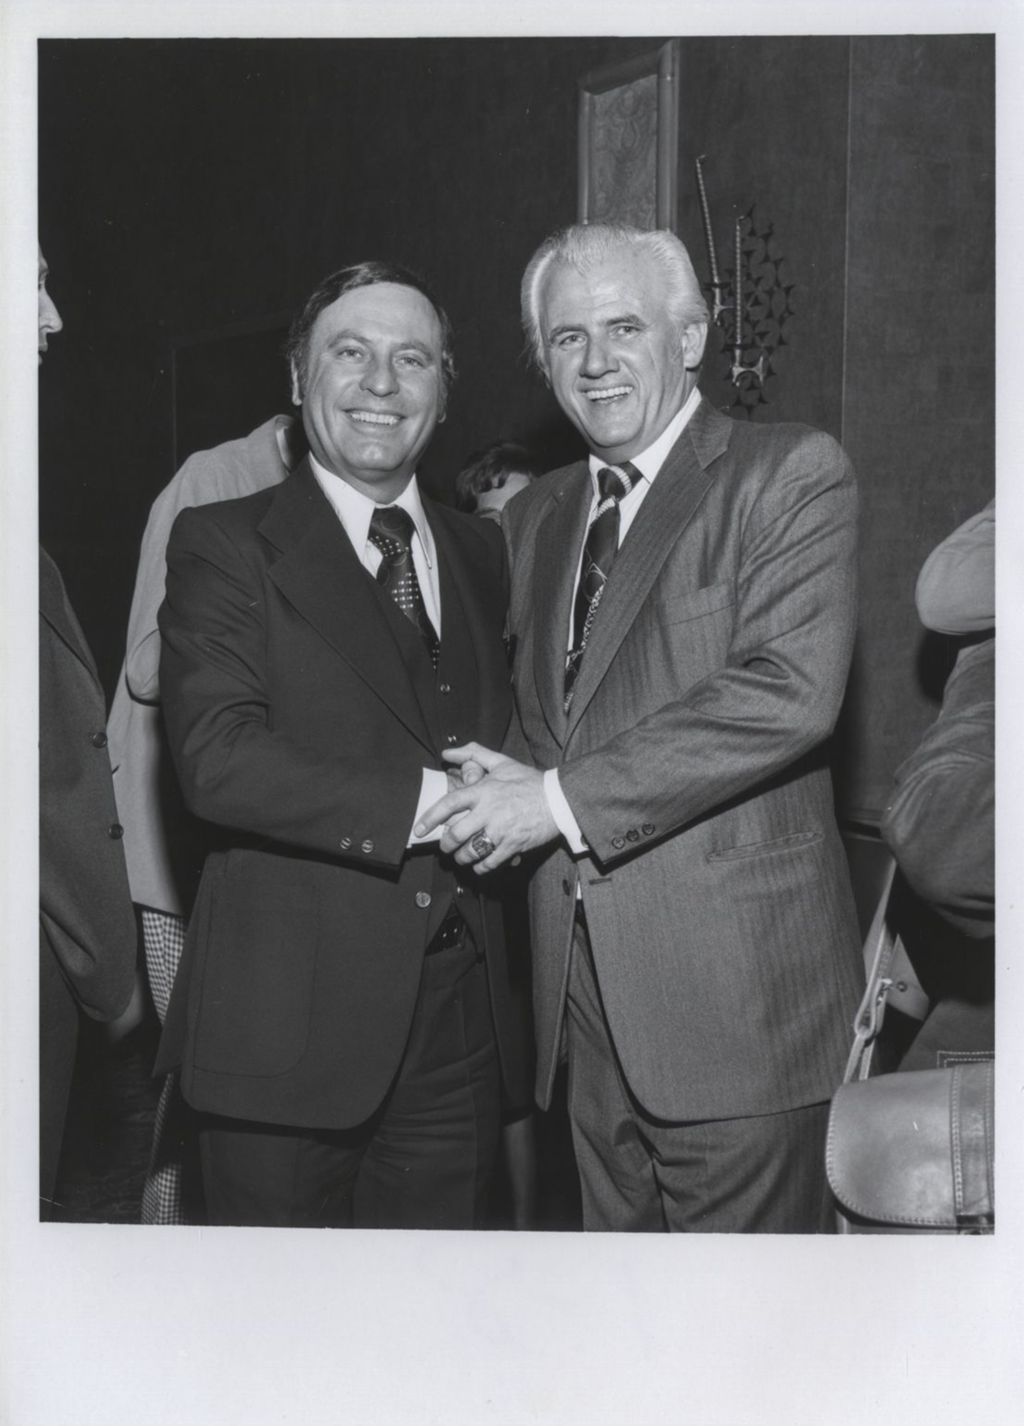 Miniature of Two men at a Democratic Club of Winnetka event